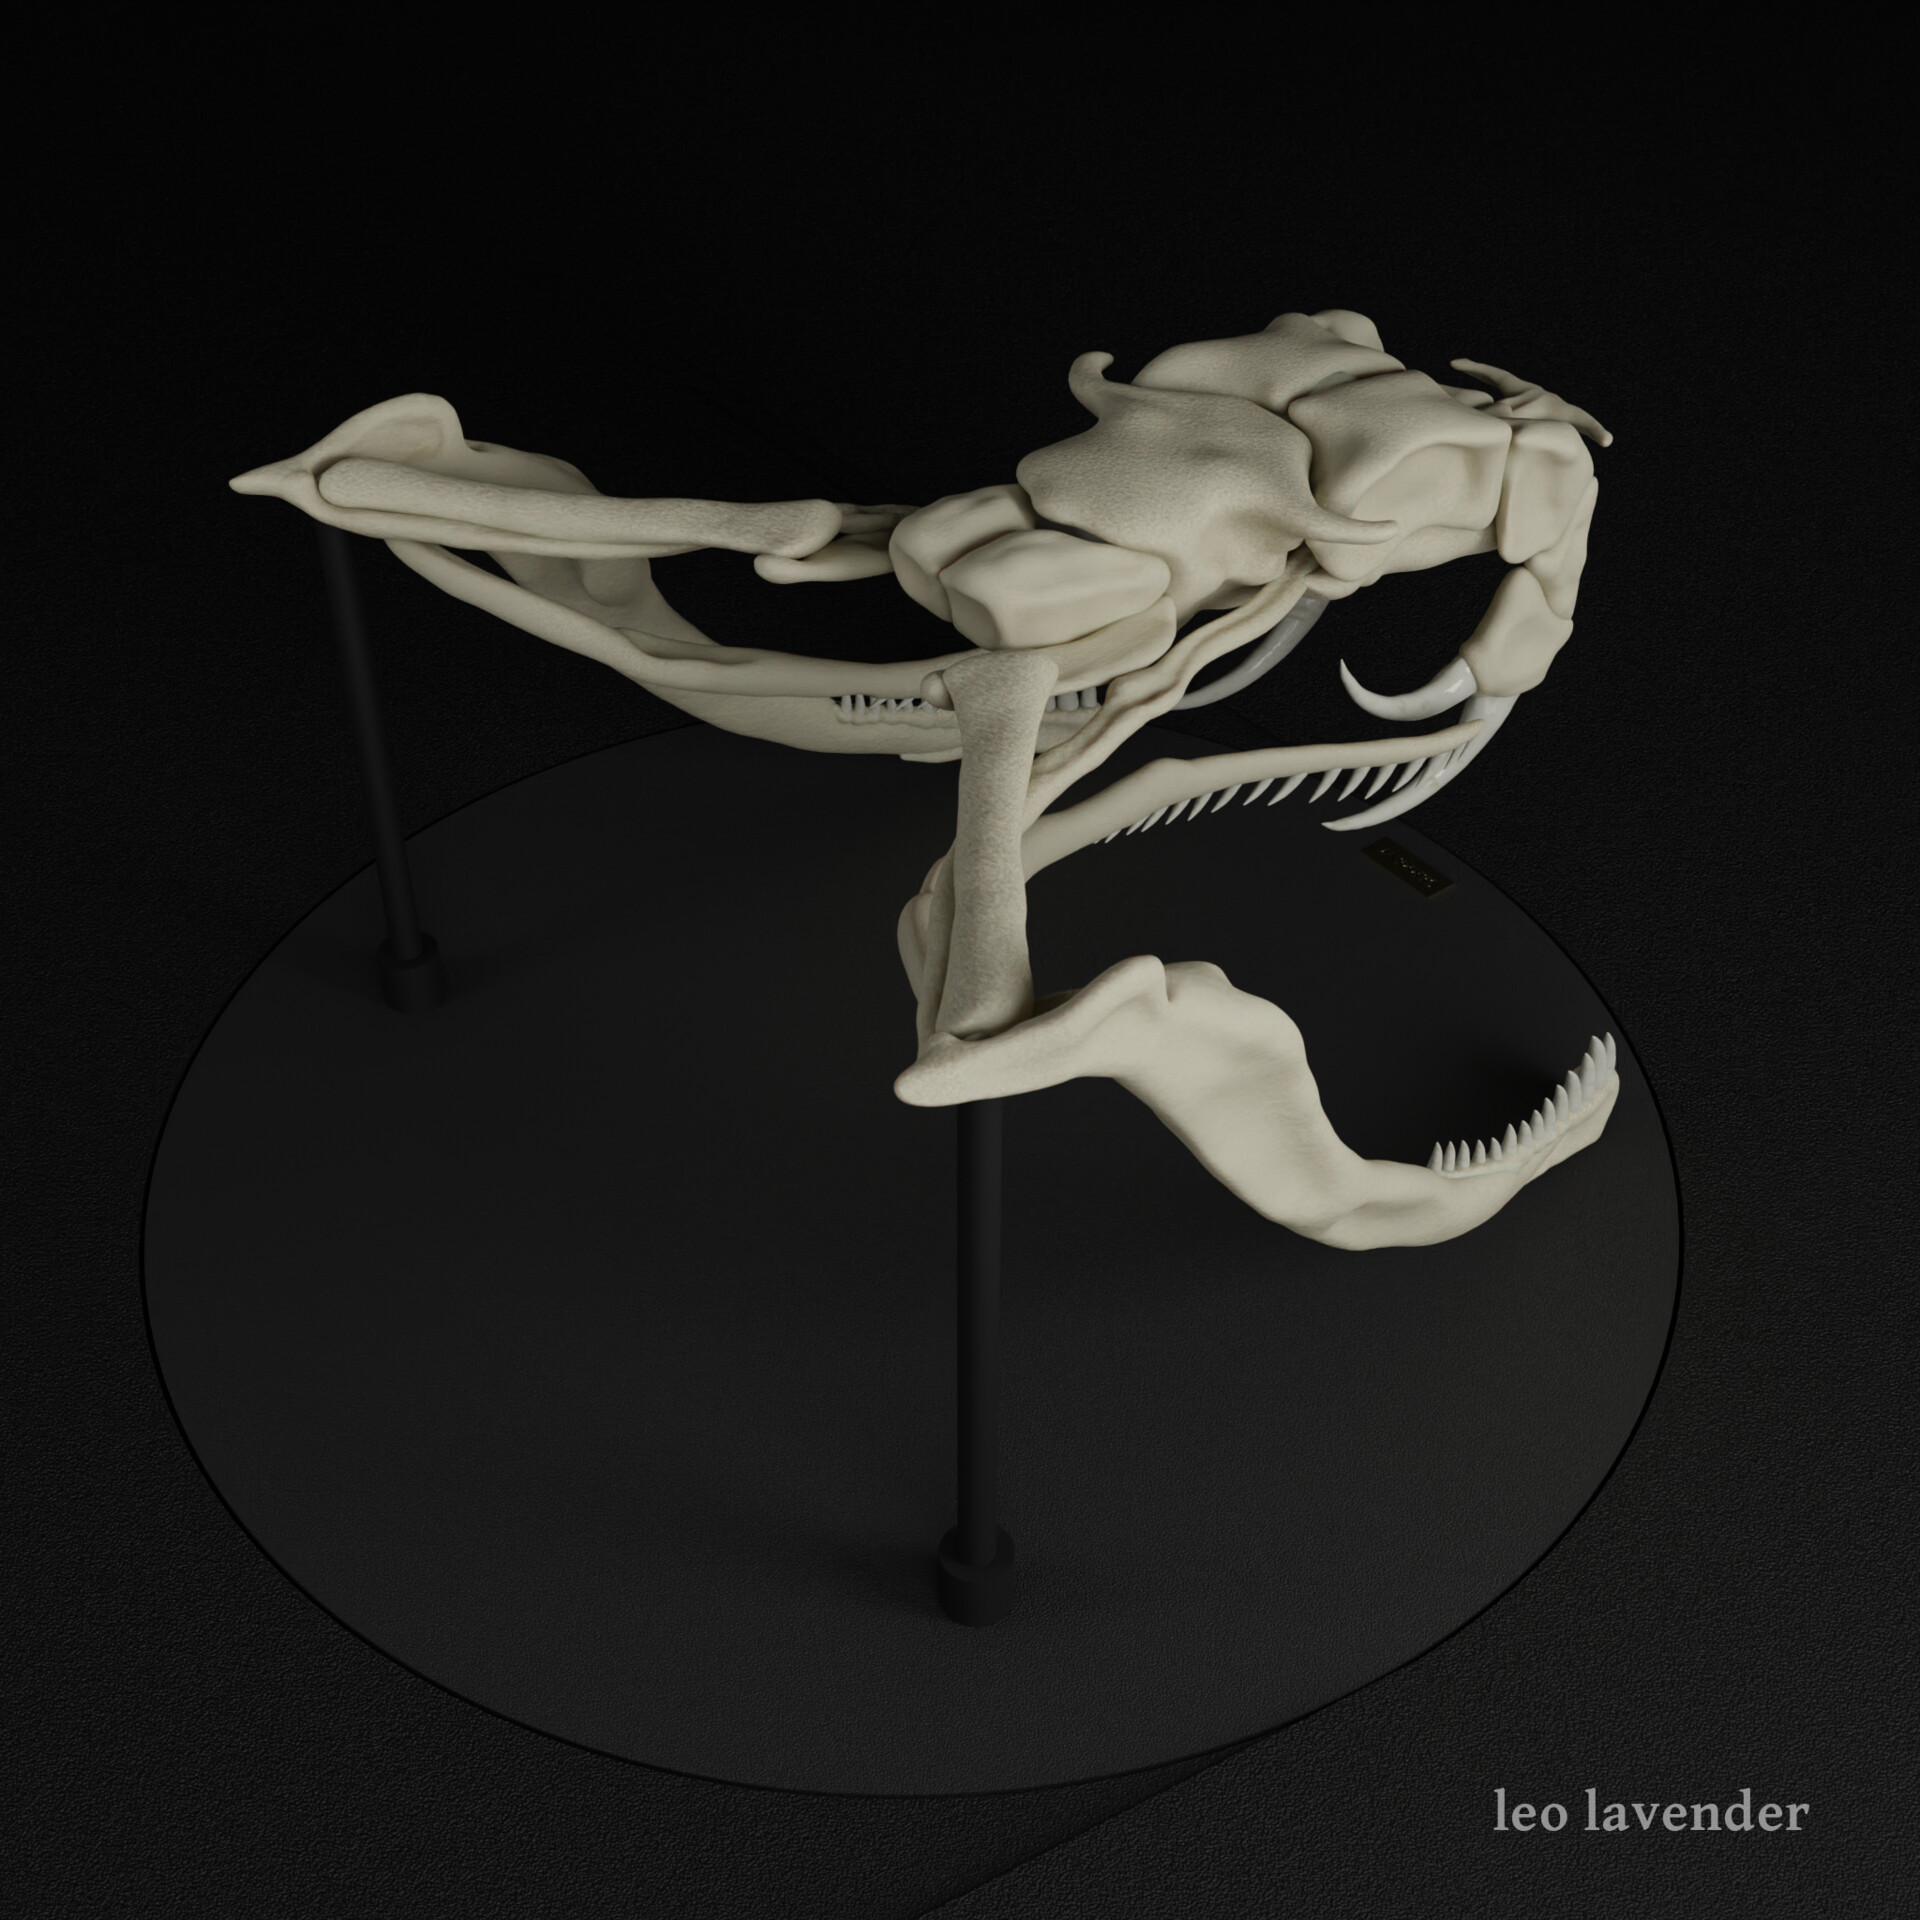 3D Print of Snake by llethander